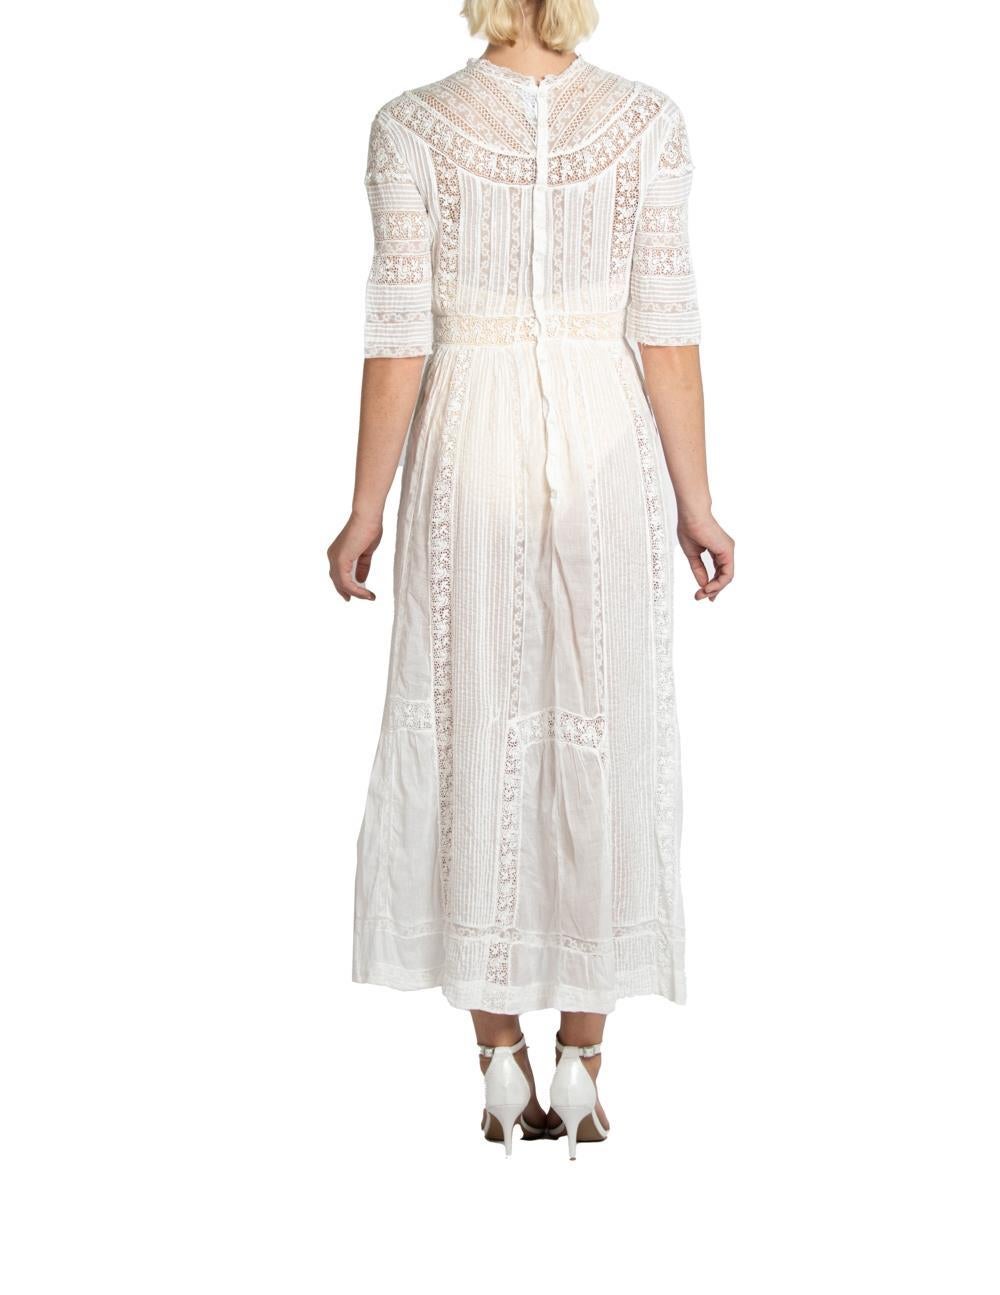 Edwardian White Cotton & Lace Tea Dress With 3-D Flowers For Sale 1